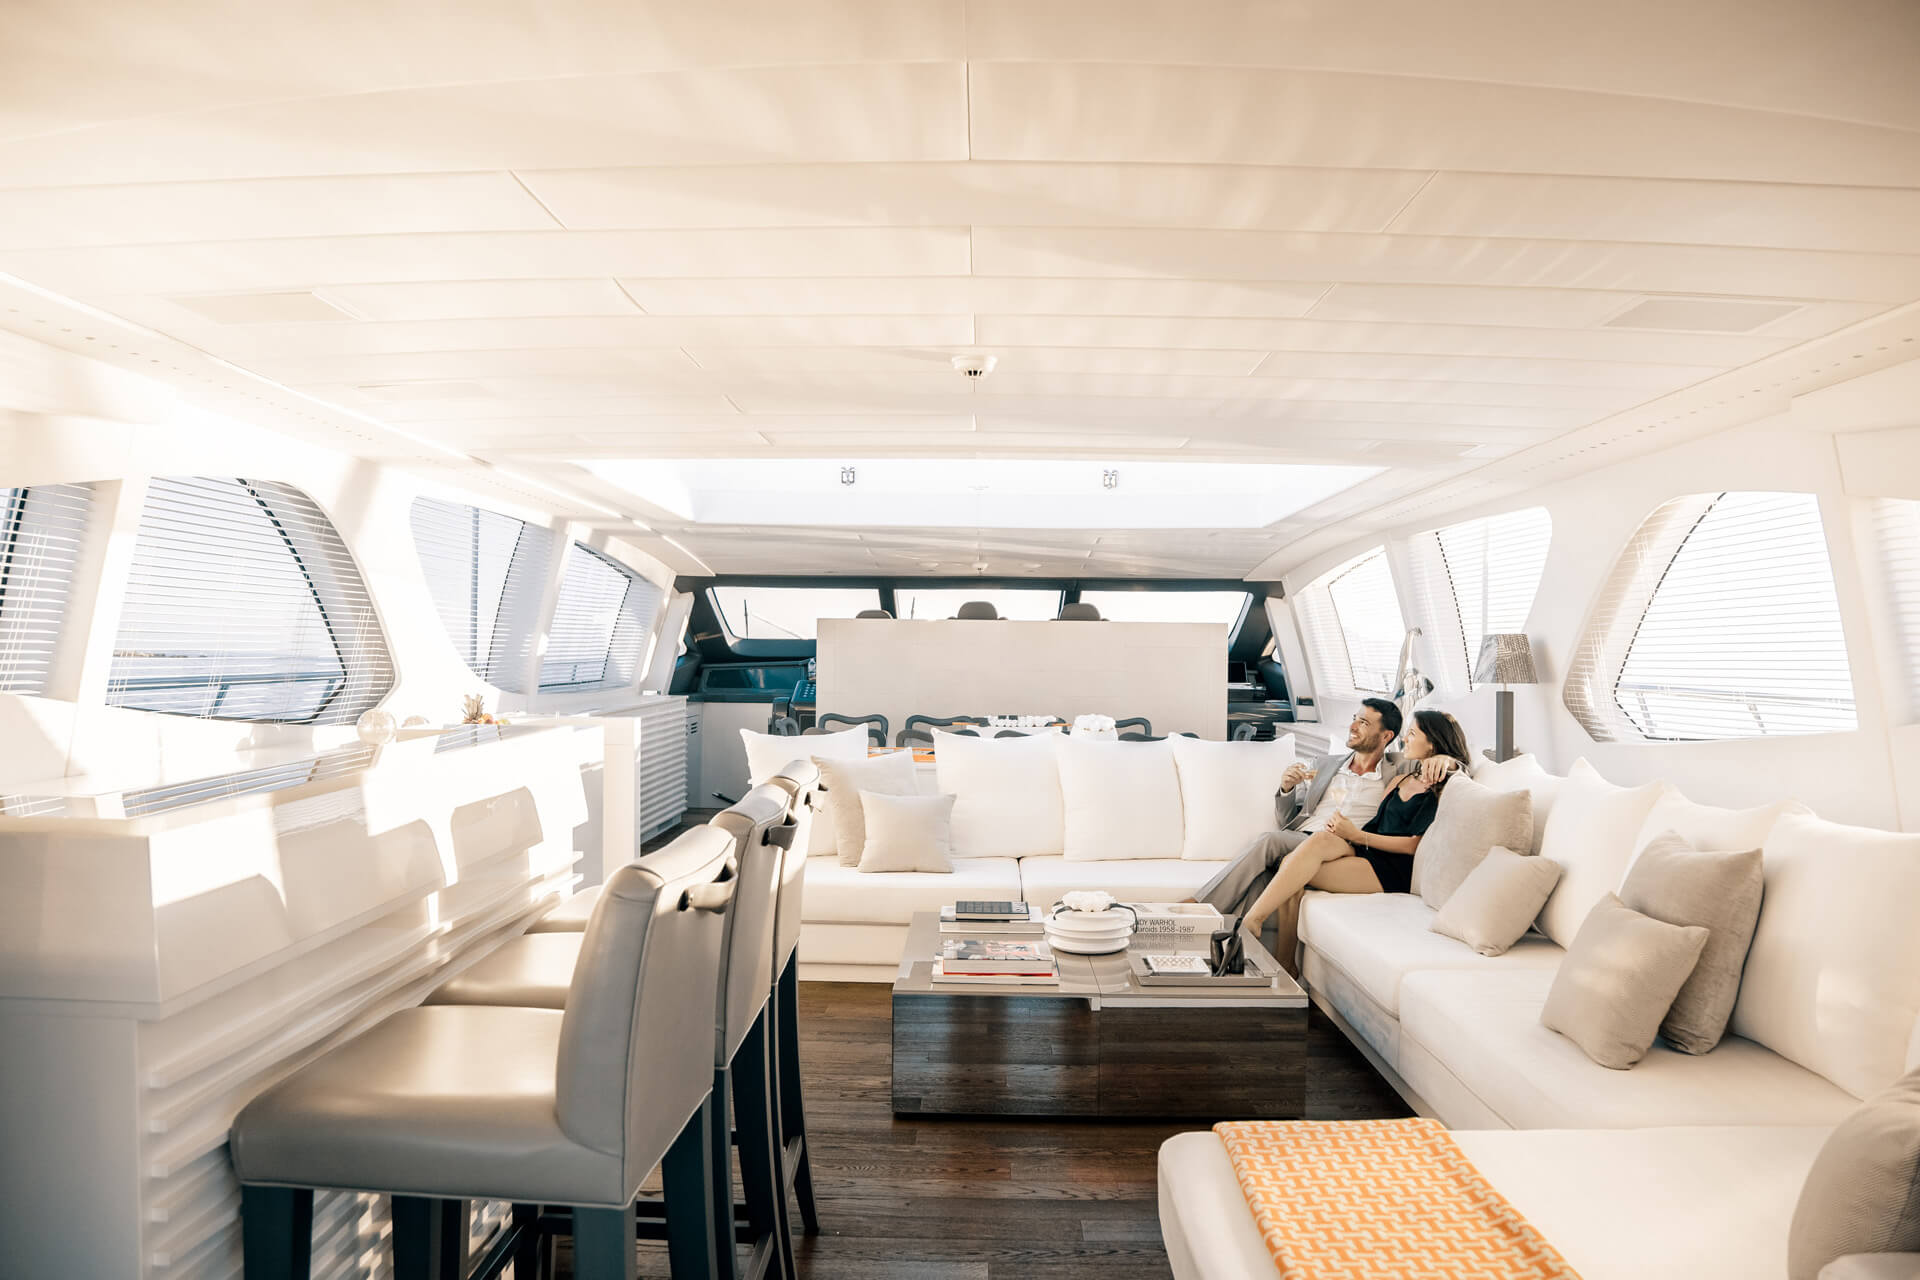 Couple relax in internal lounge, Beachouse Mangusta 130 yacht